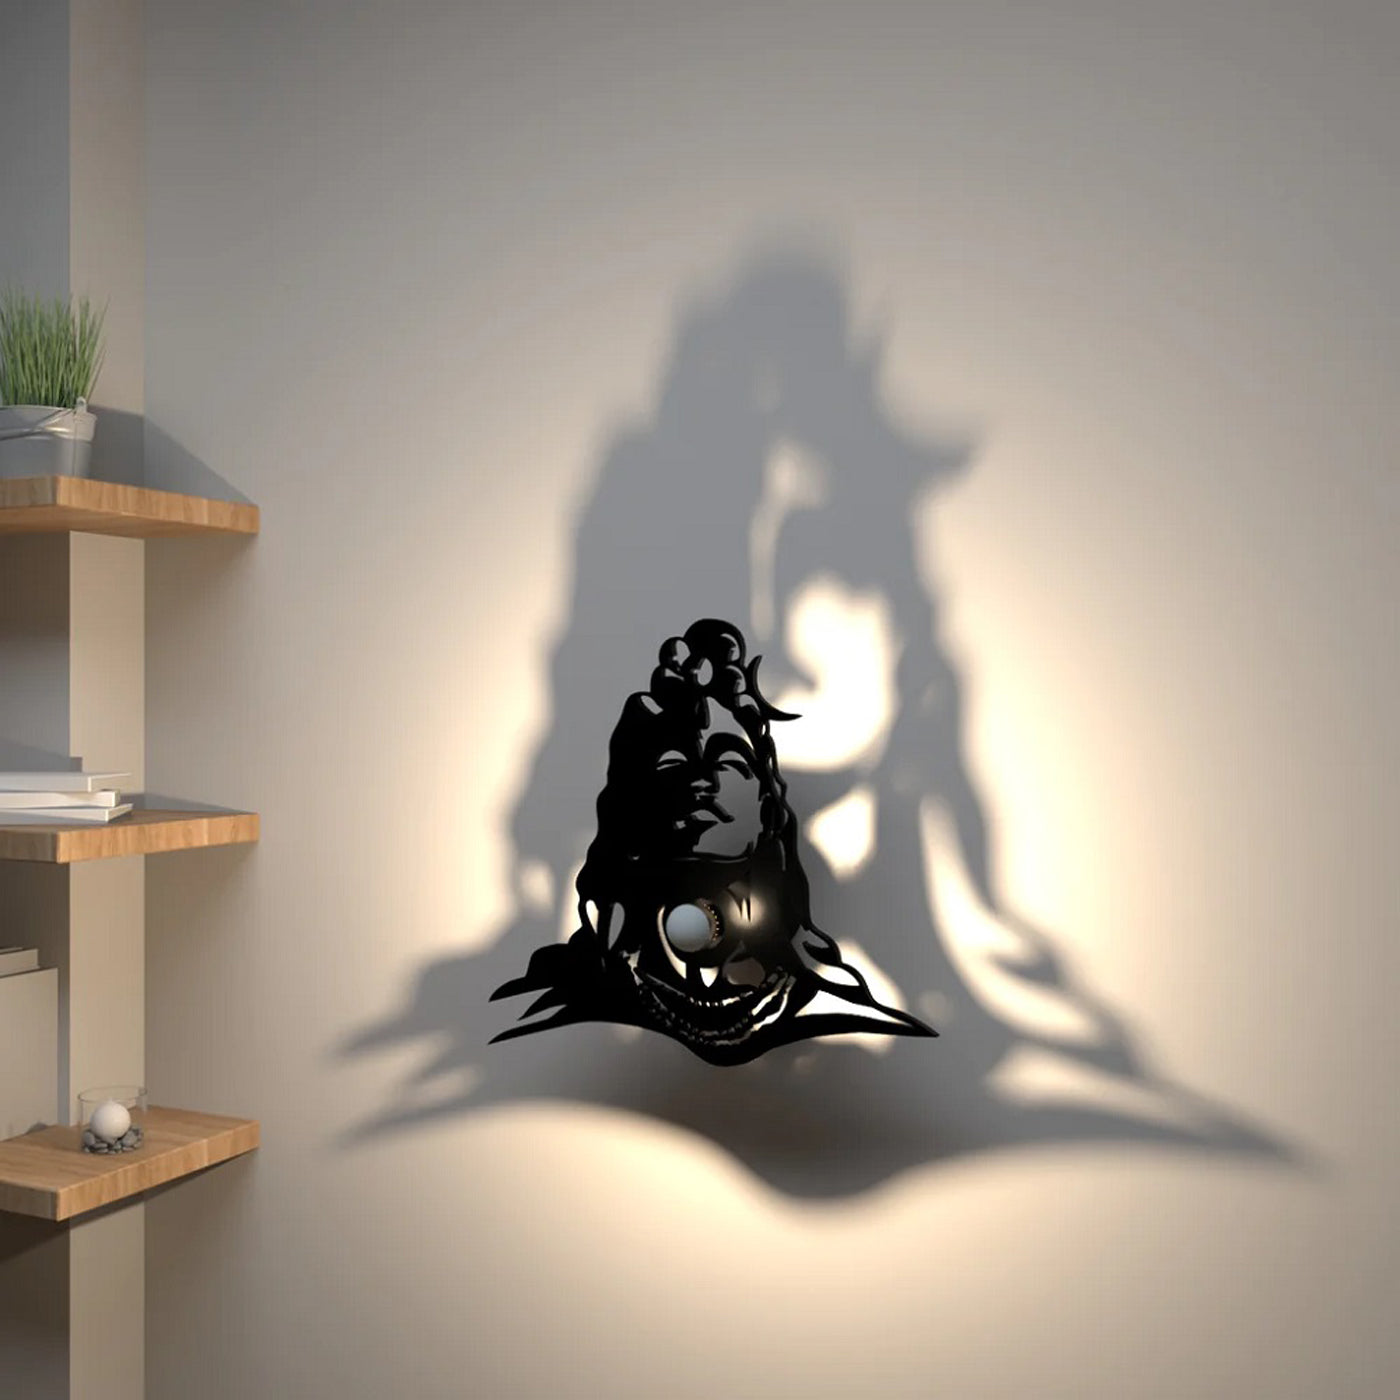 Adi Yogi design Shadow Lamp for Home / Office wall decor